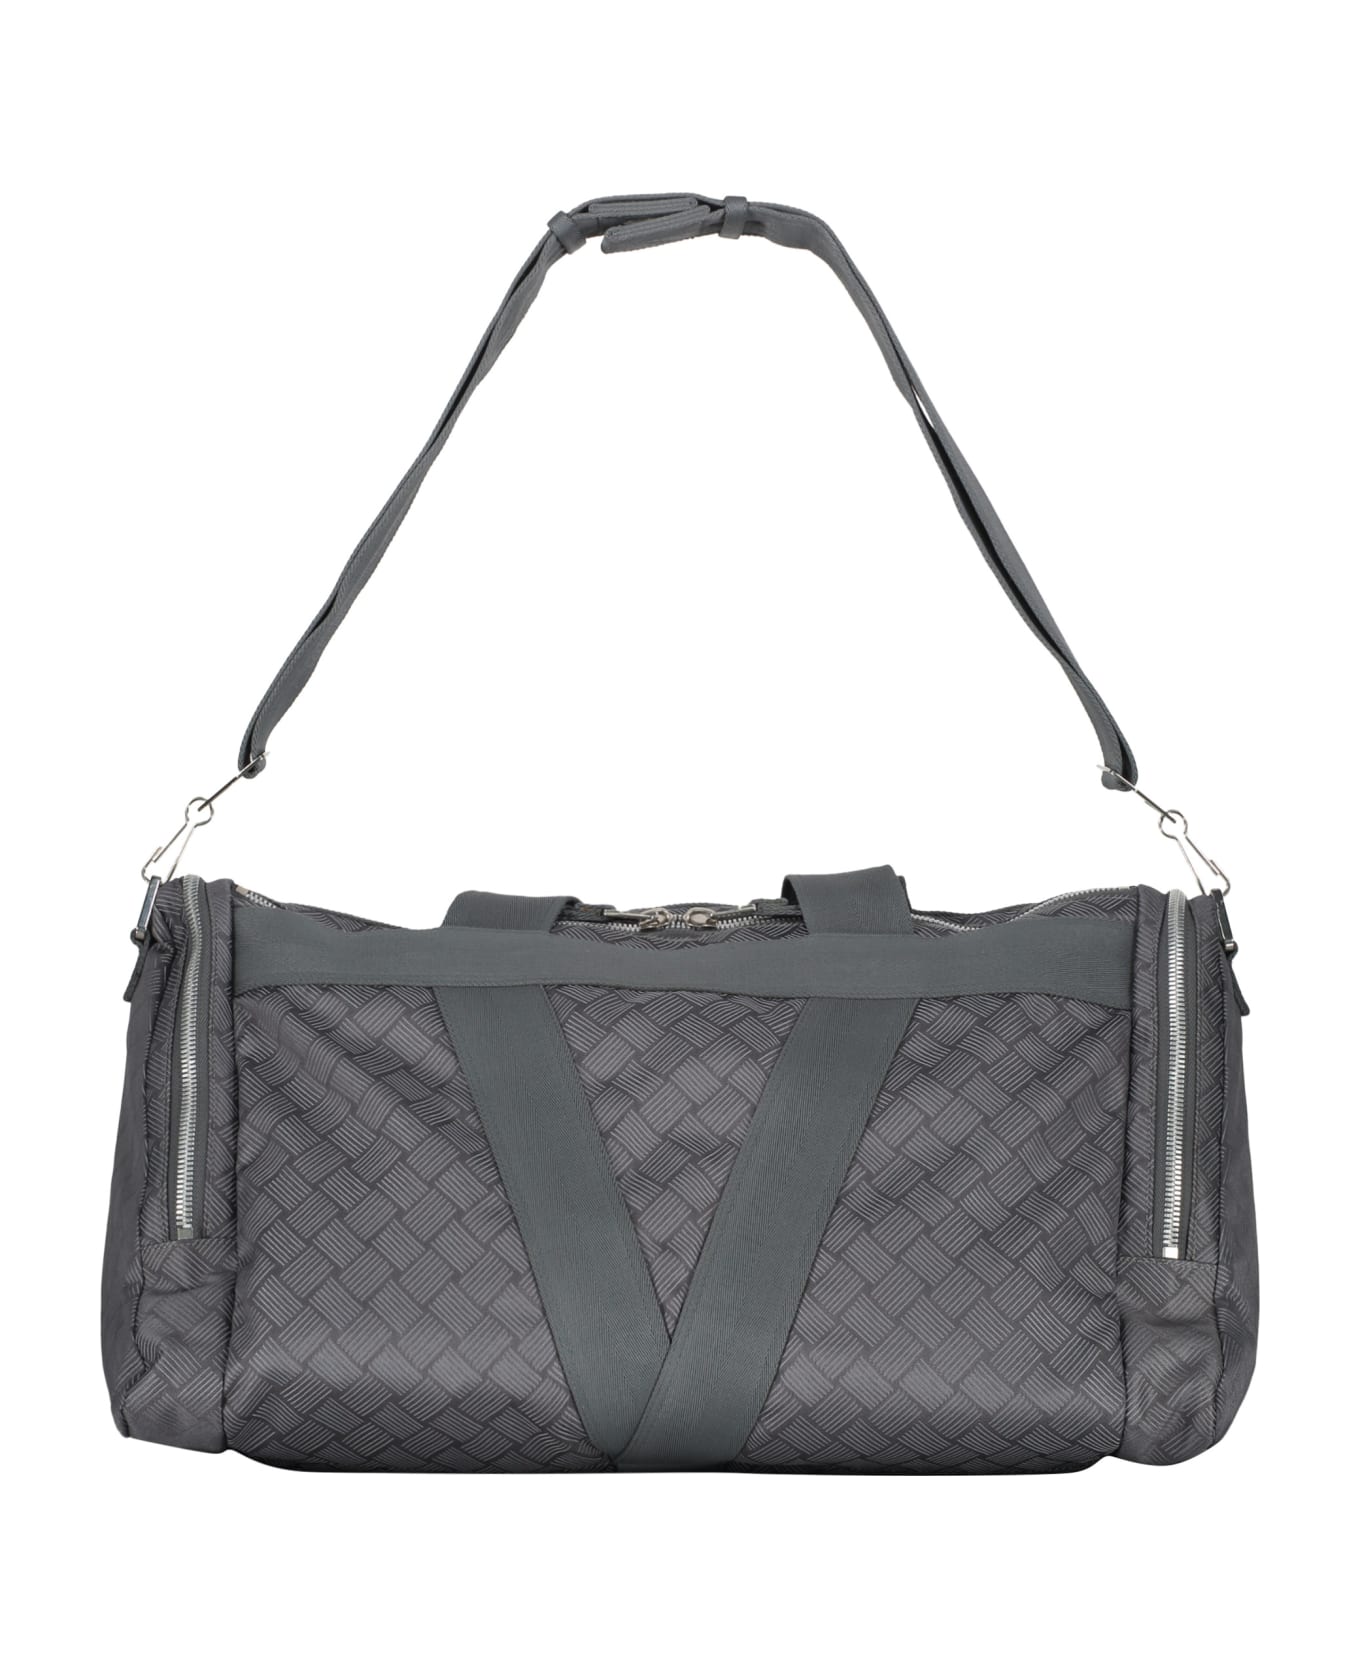 Bottega Veneta Travel Bag - grey トラベルバッグ